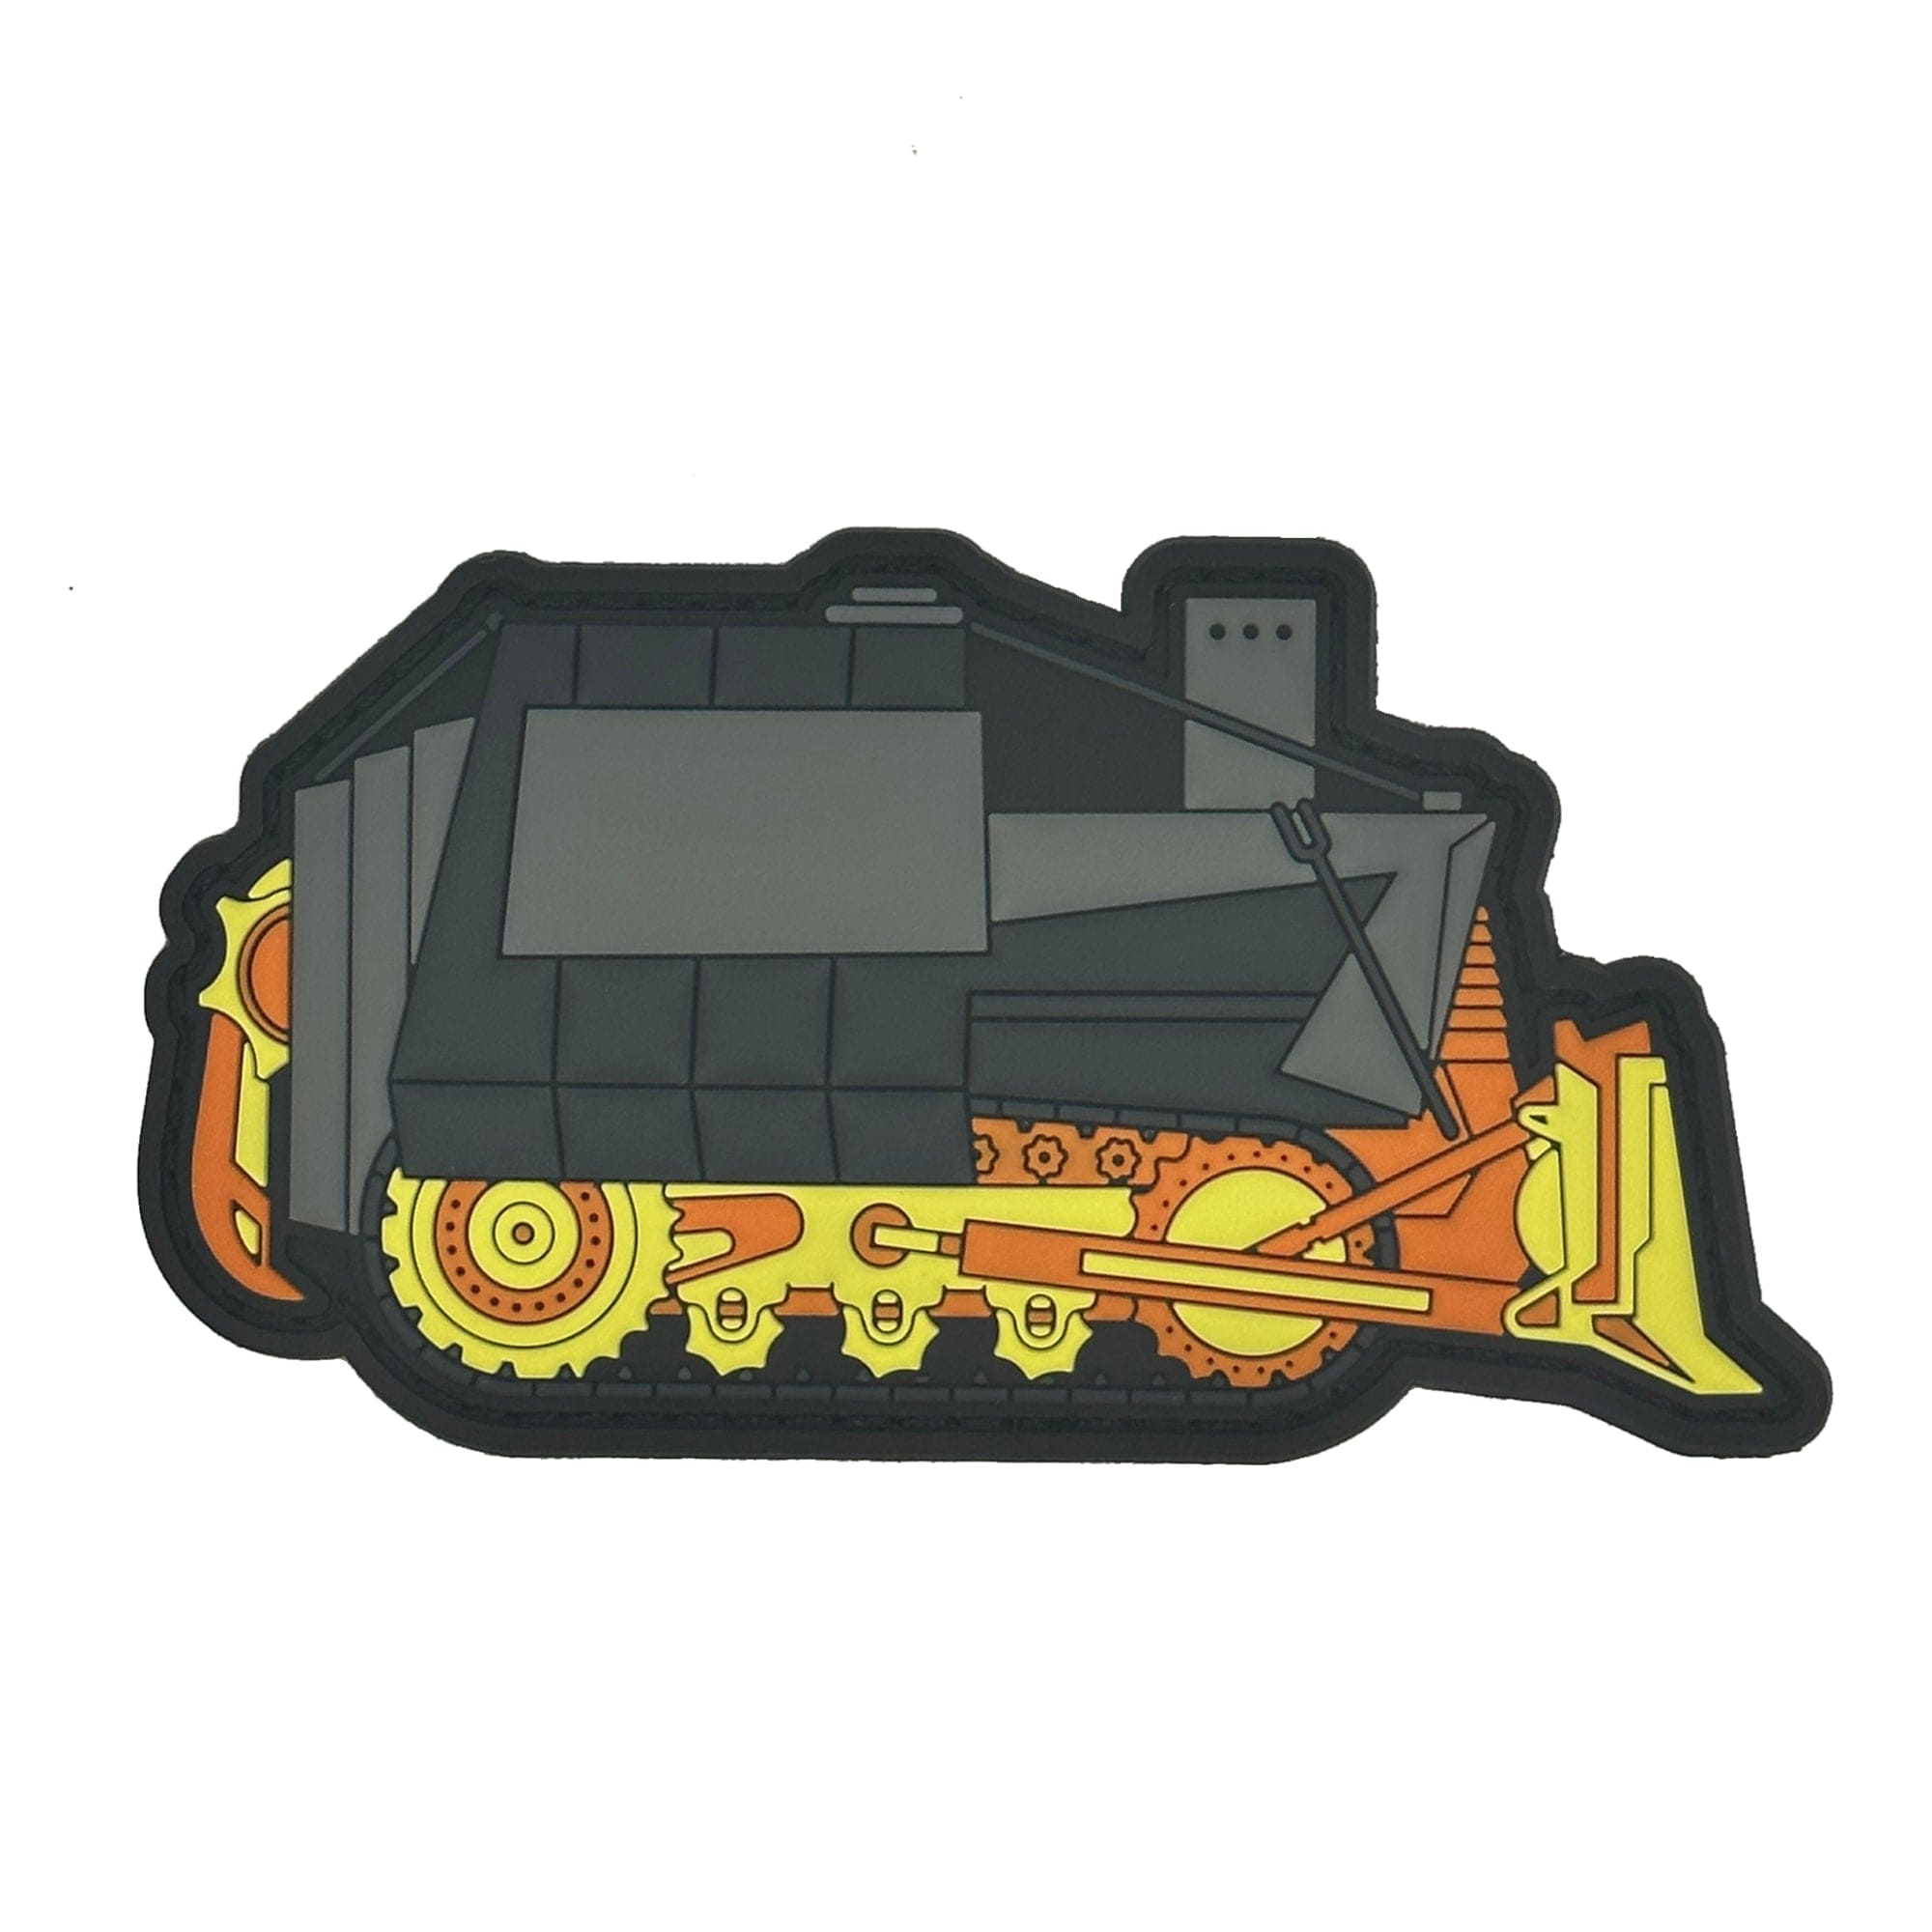 Tactical Gear Junkie Patches Full Color Killdozer - 2x4 PVC Patch - Multiple Colors